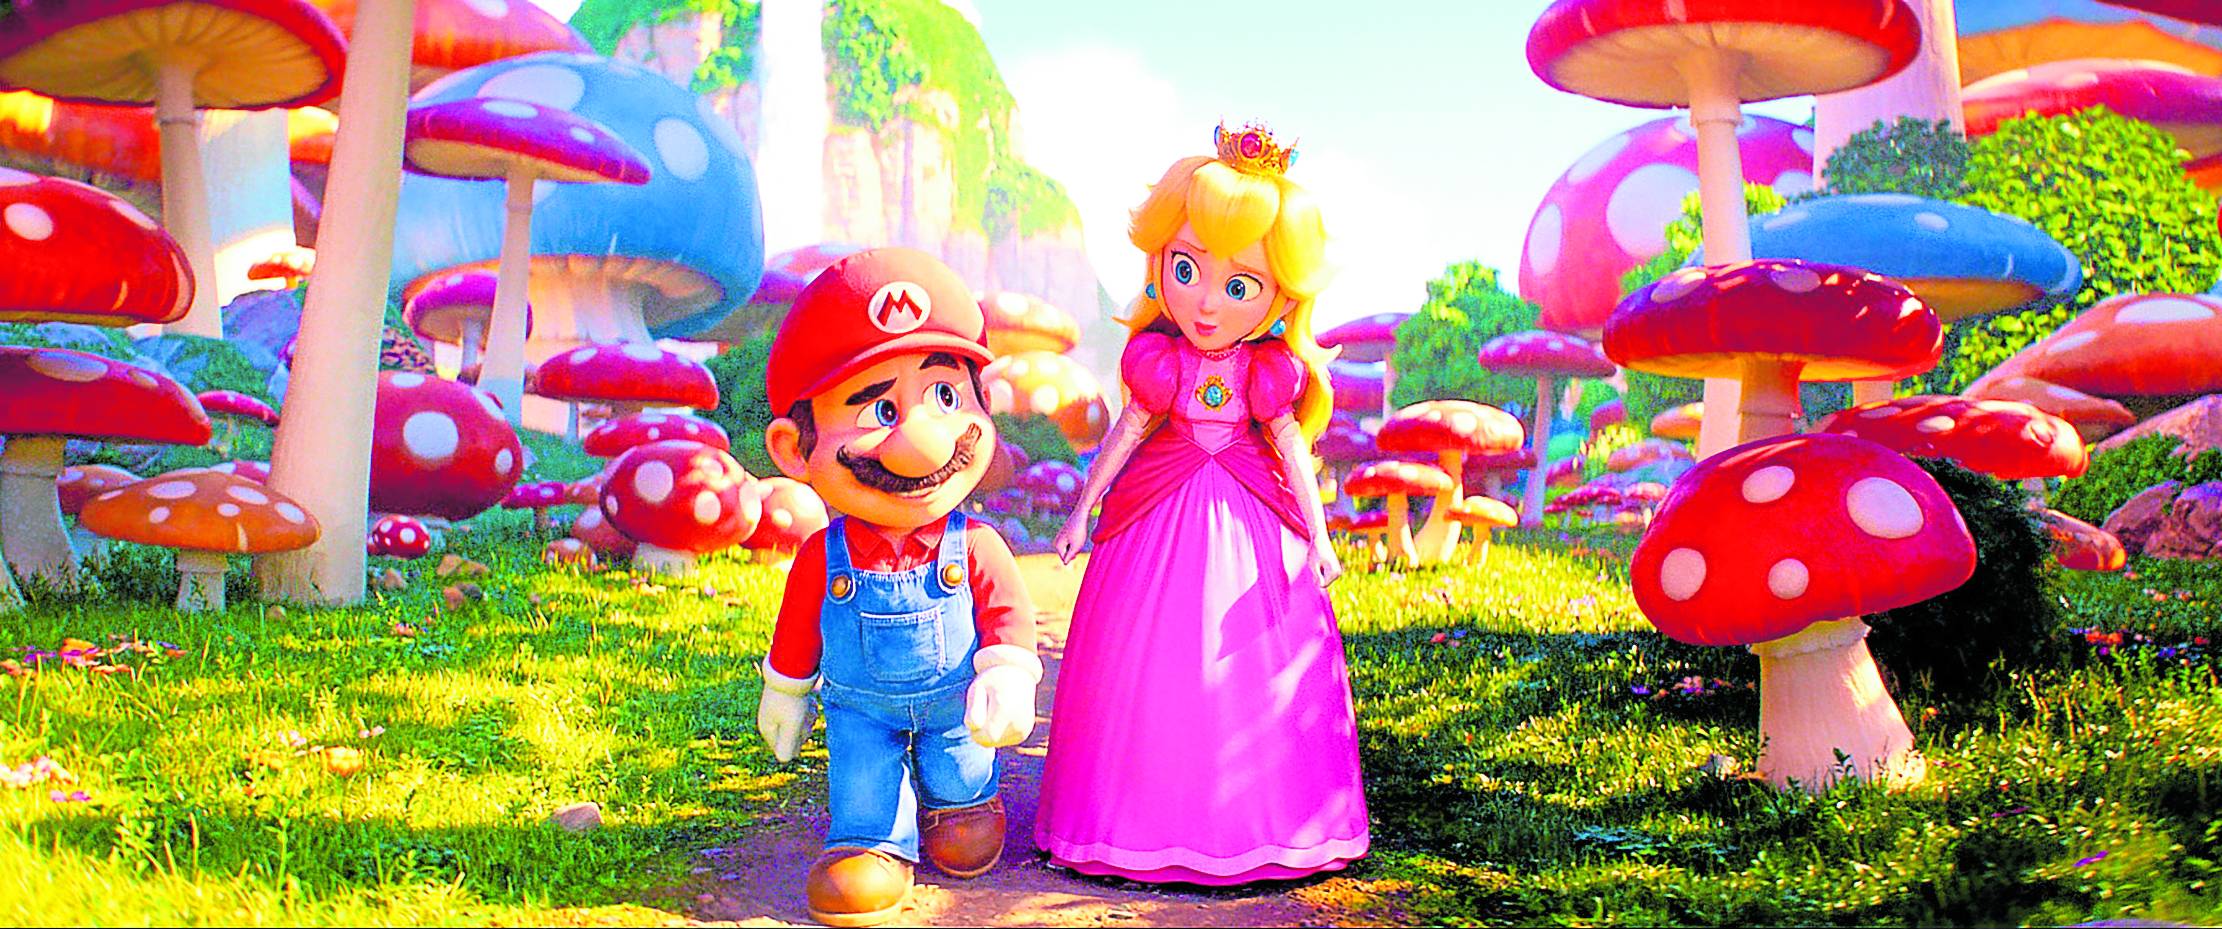 Mario (voiced by Chris Pratt) and Princess Peach (Anya Taylor-Joy) in “The Super Mario Bros. Movie”